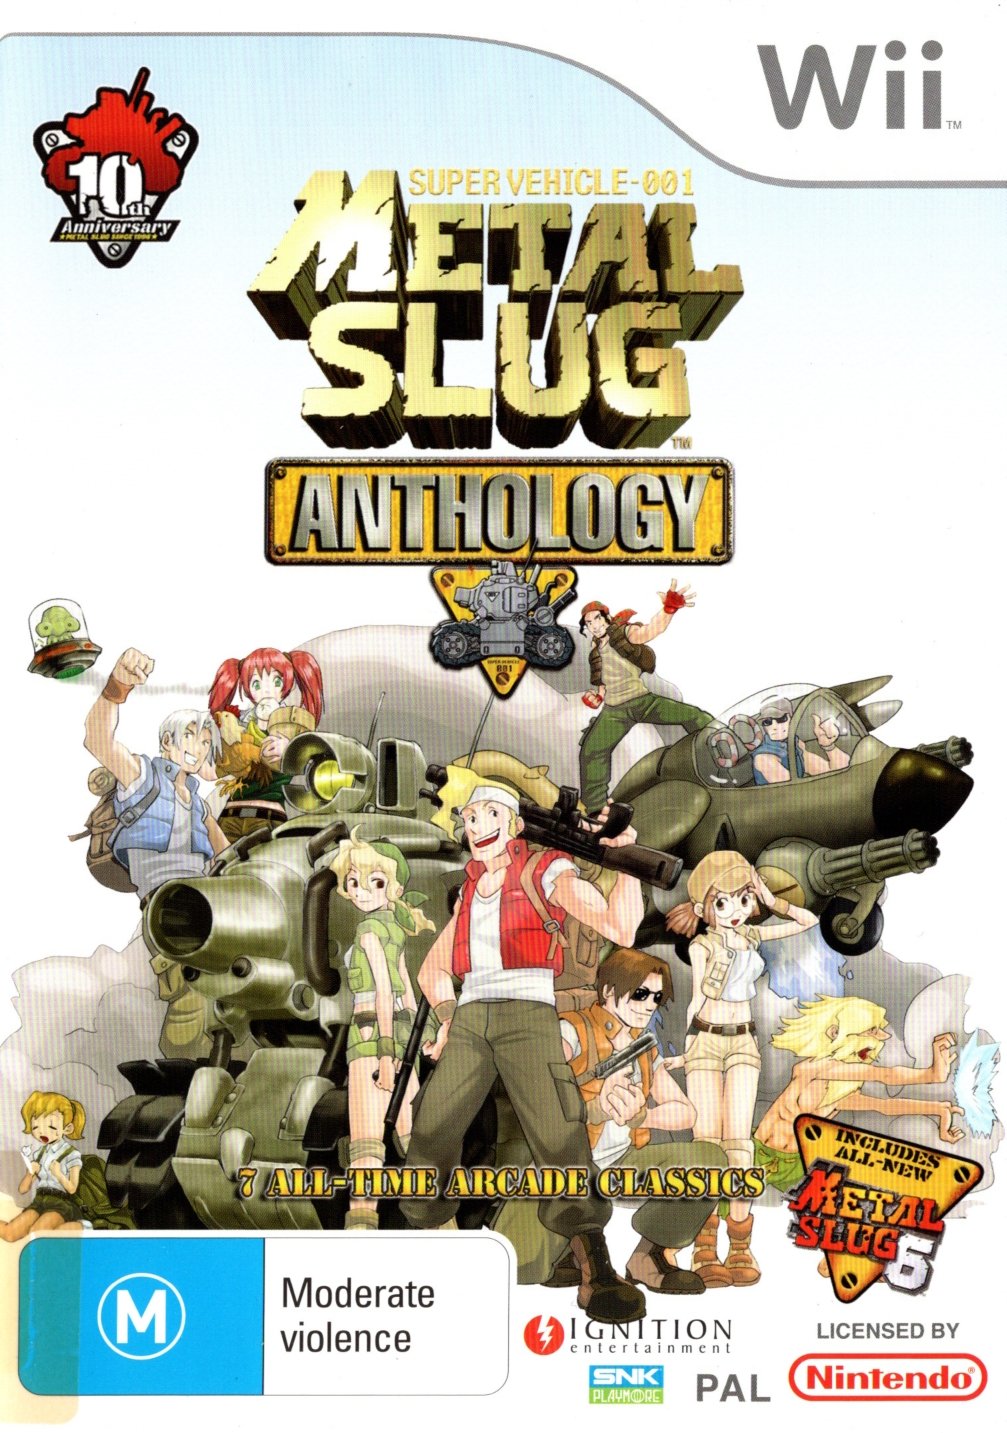 Game | Nintendo Wii | Metal Slug Anthology